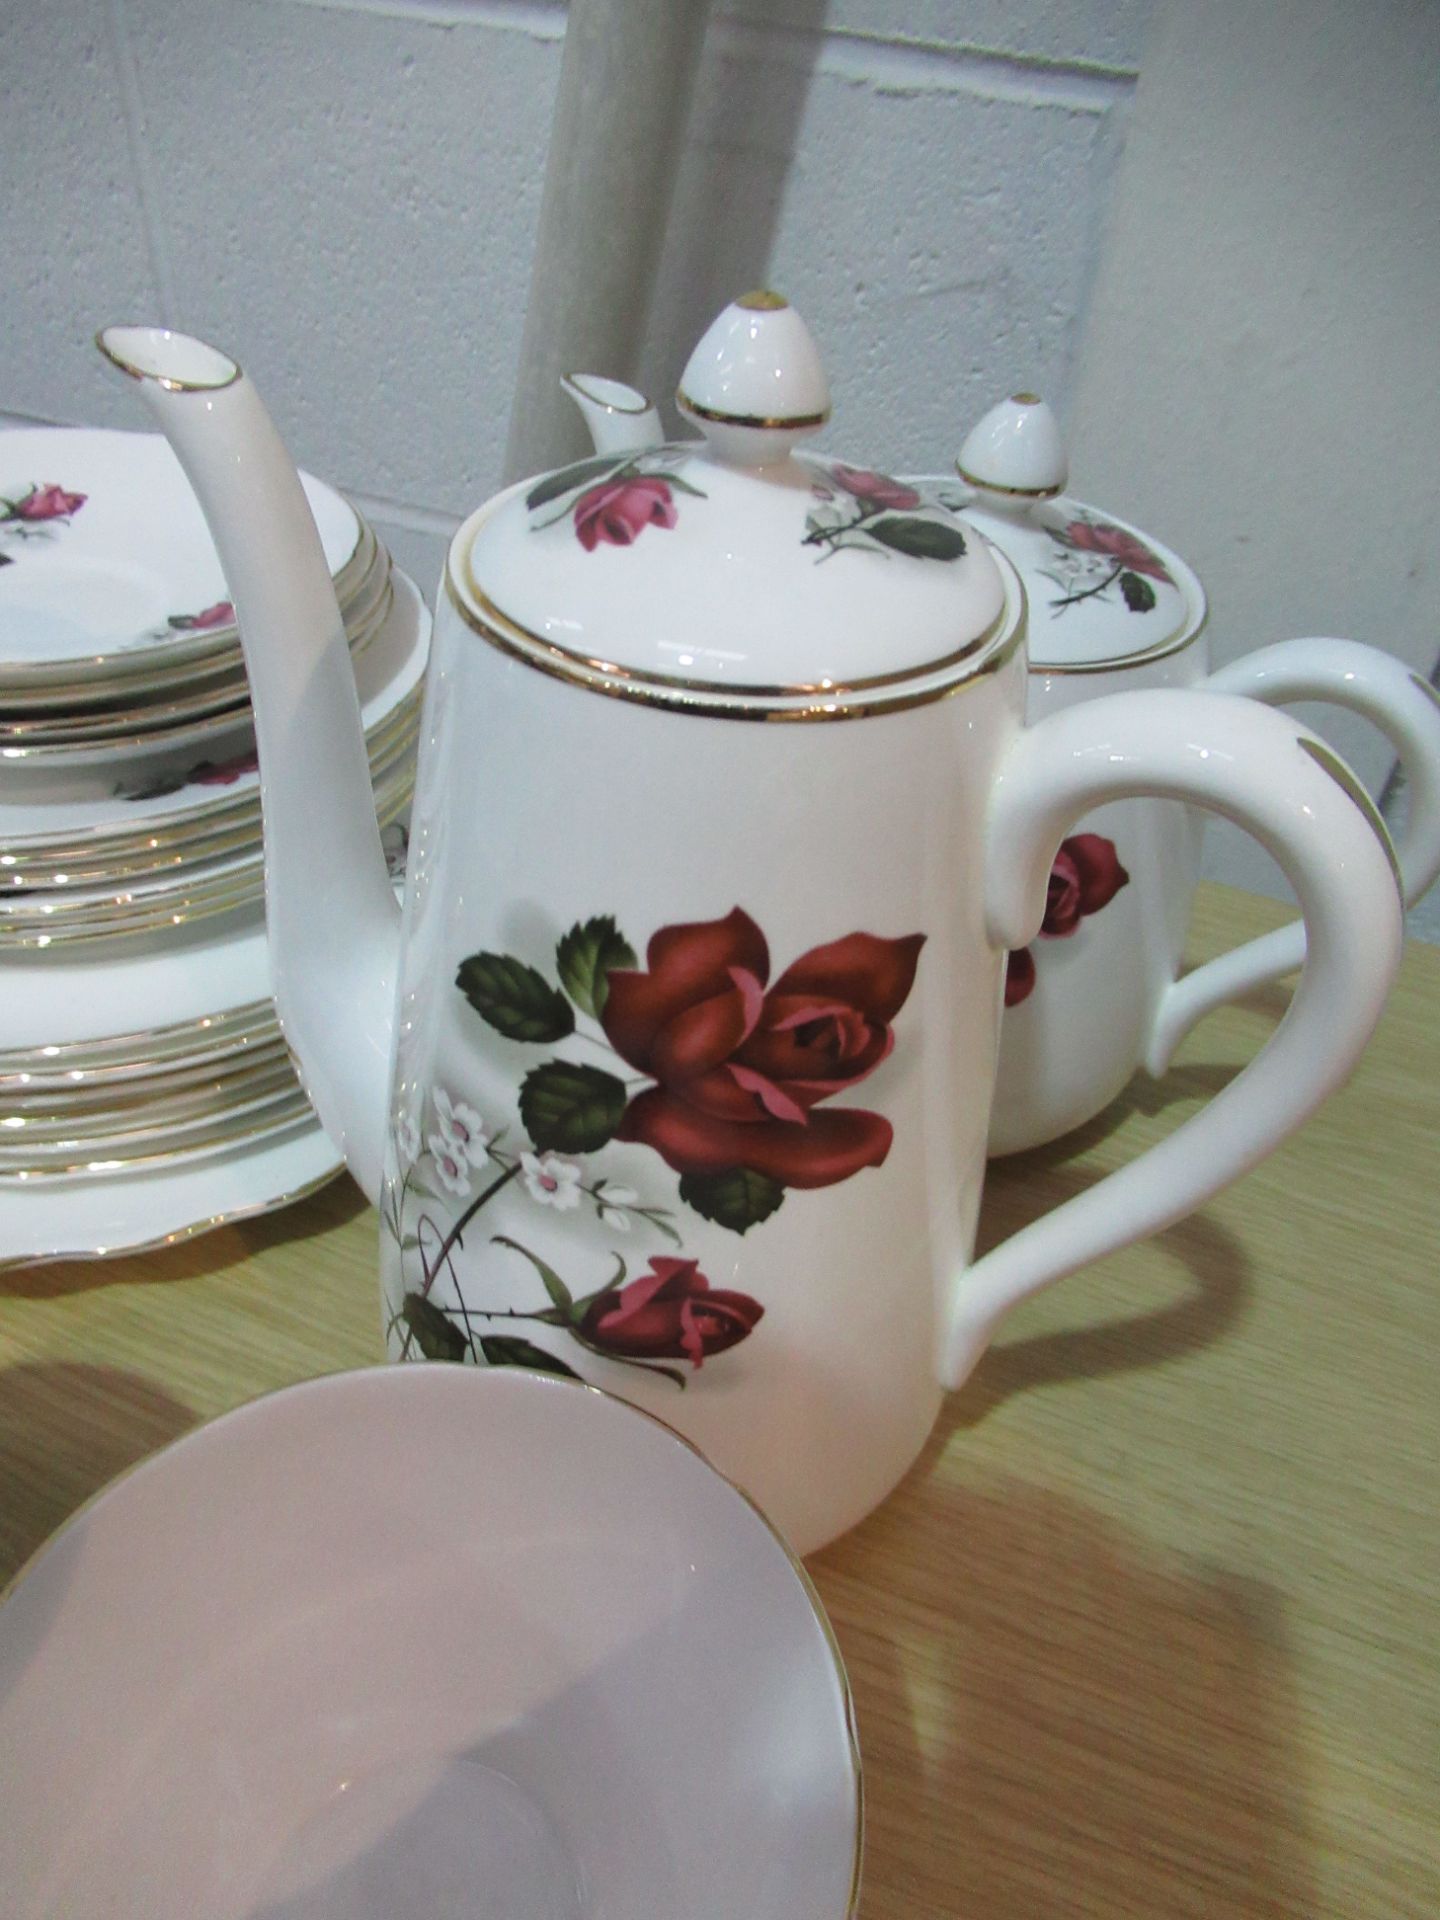 Rose Adorned Tea Service inc. Plates, Teacups, Teapot etc. - Image 3 of 3